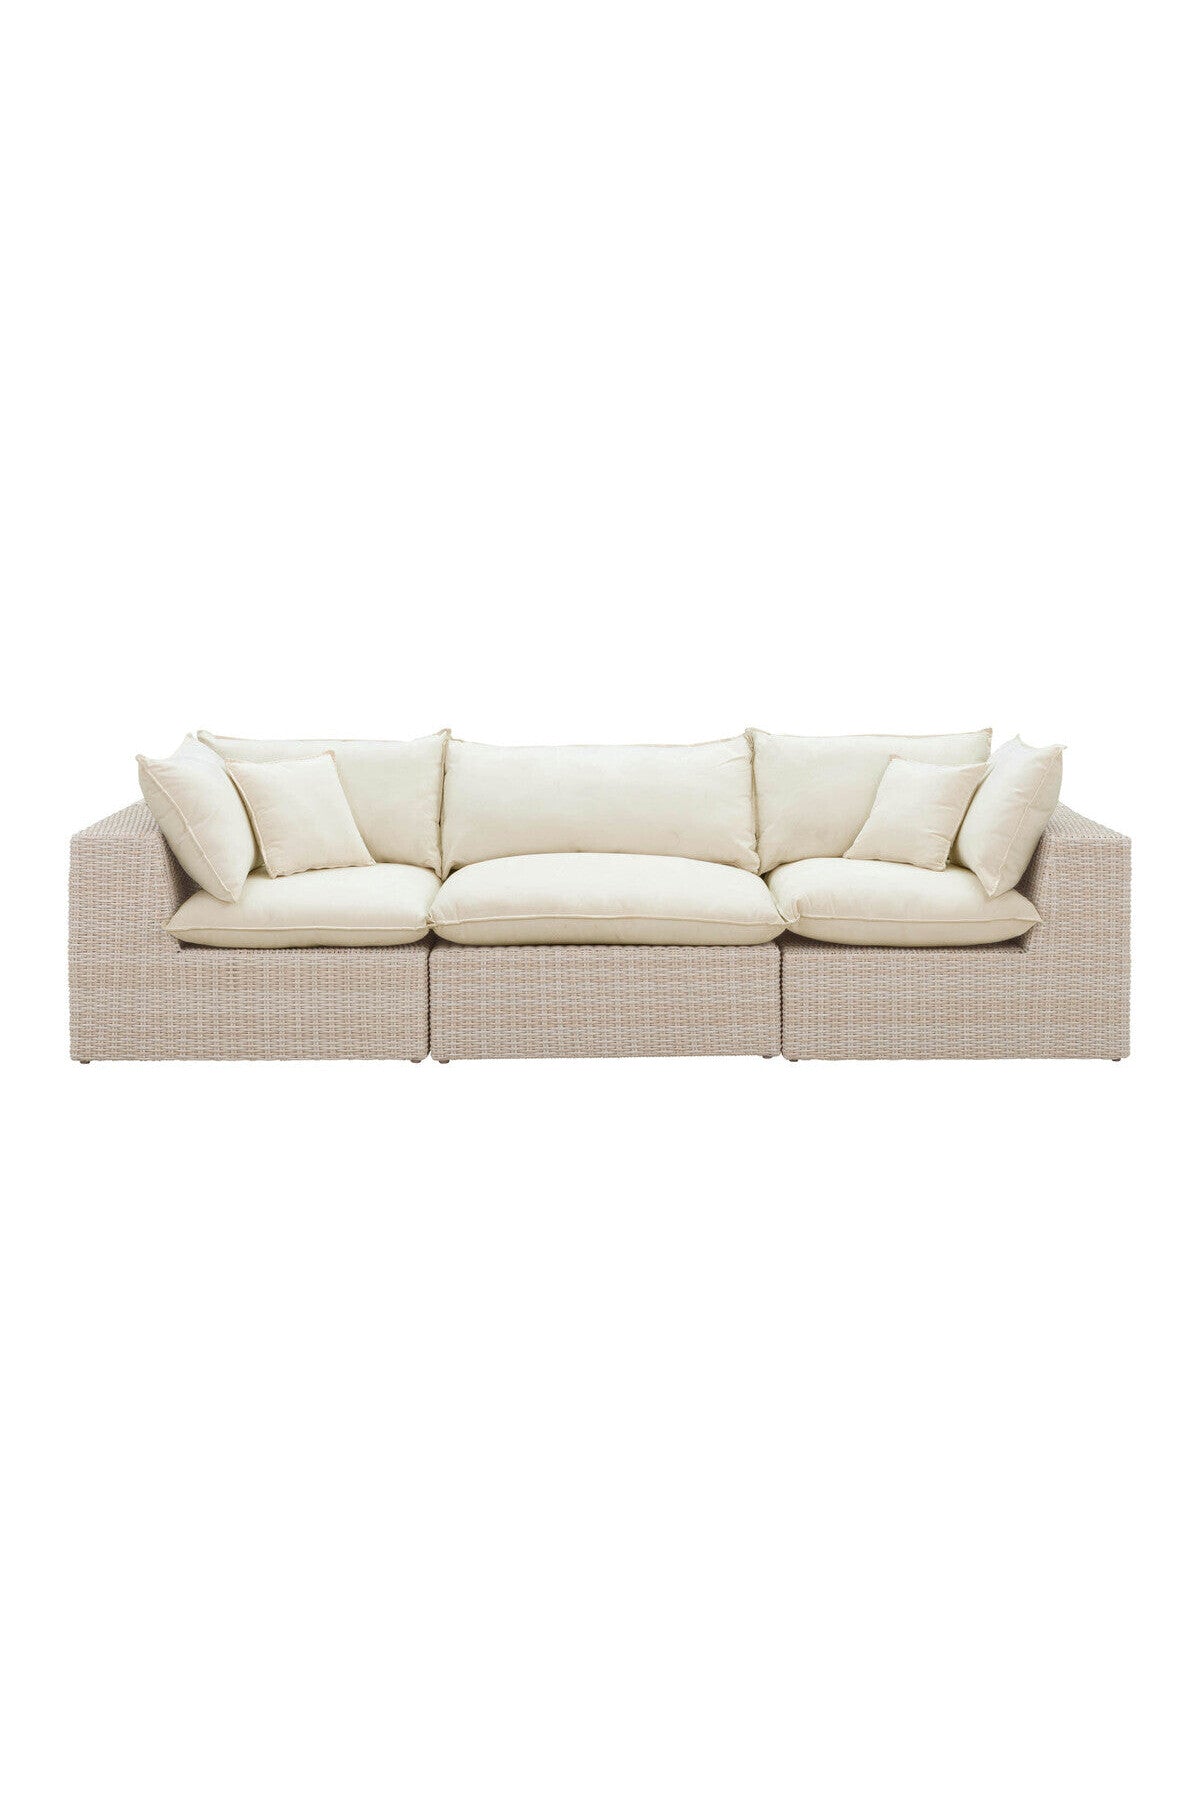 Newport Outdoor Sofa - 2 Sizes